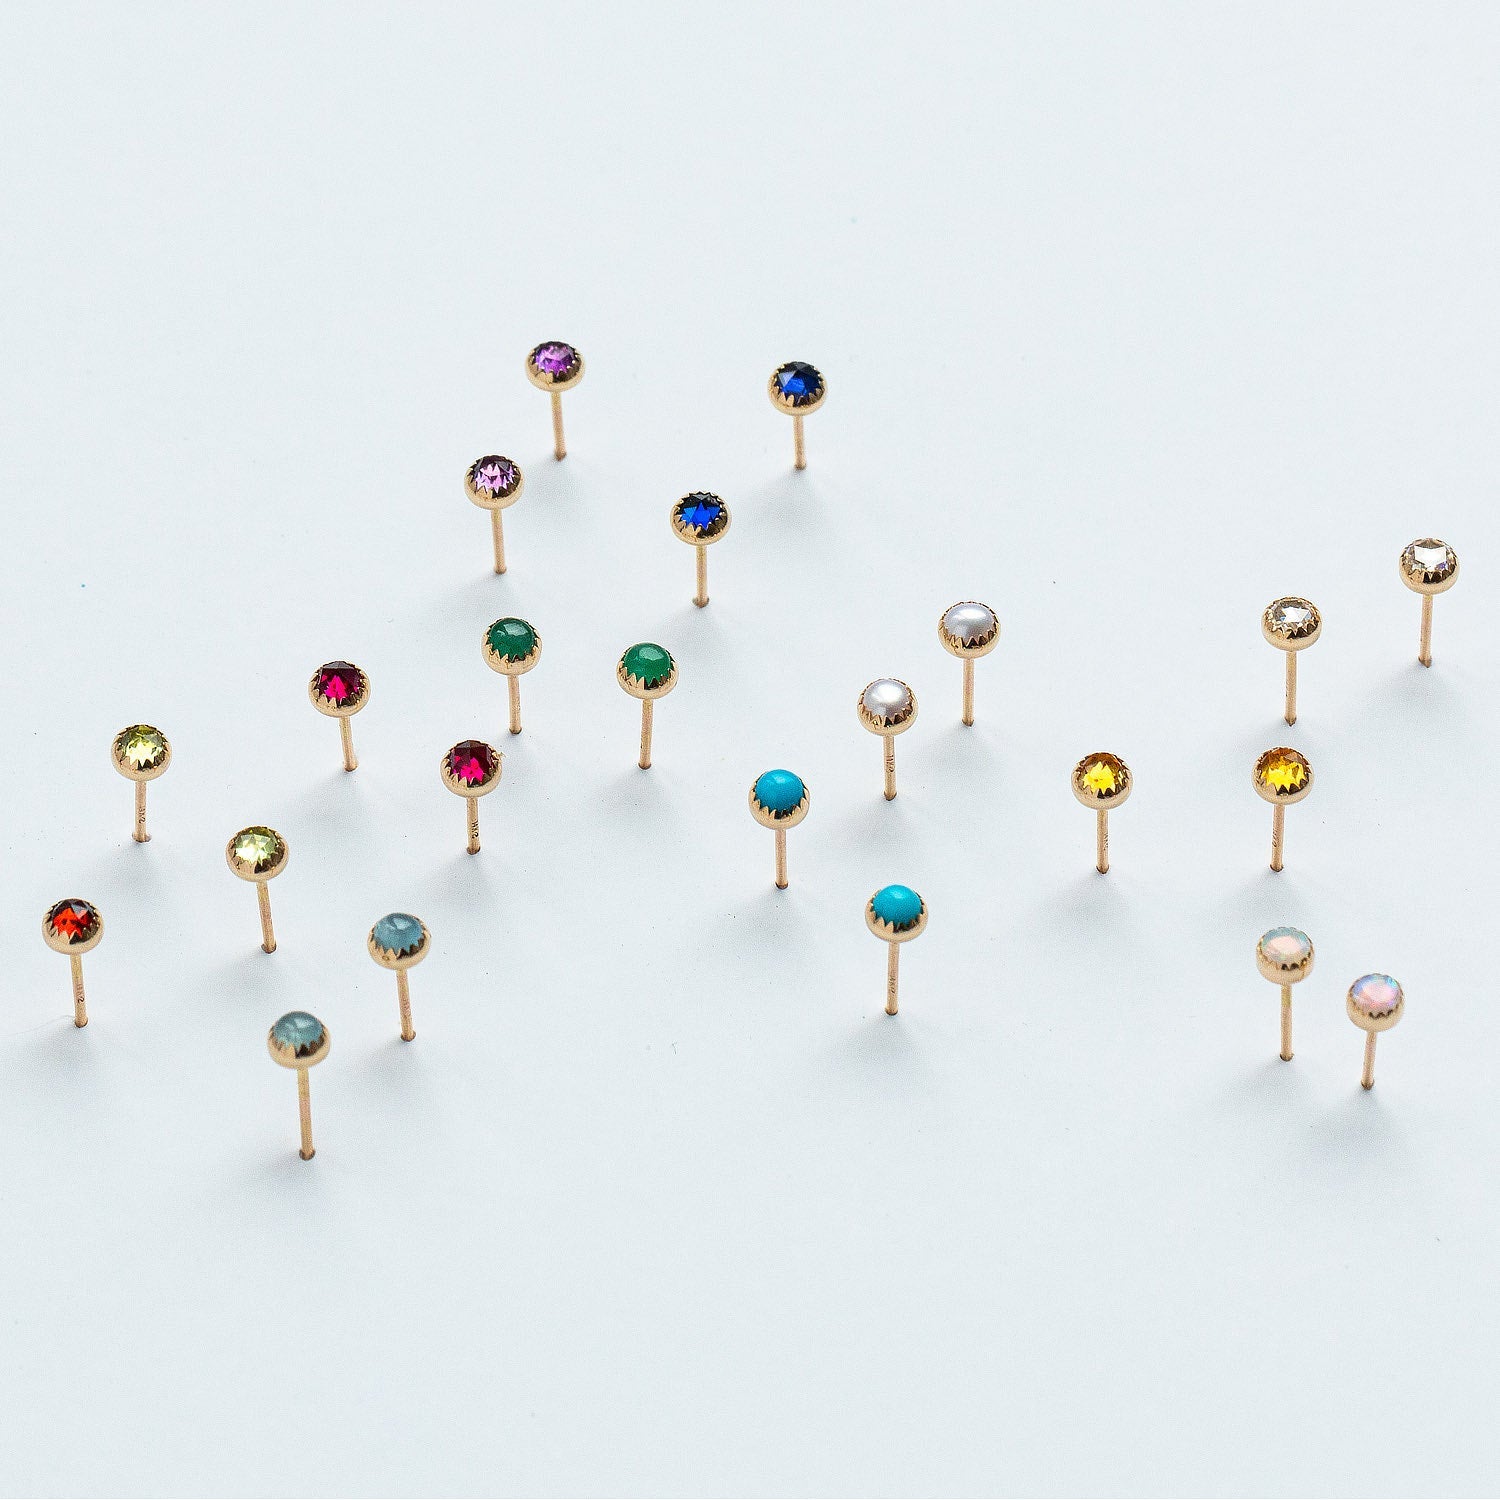 Emerald & solid gold stud earrings - Simone Walsh Jewellery Australia